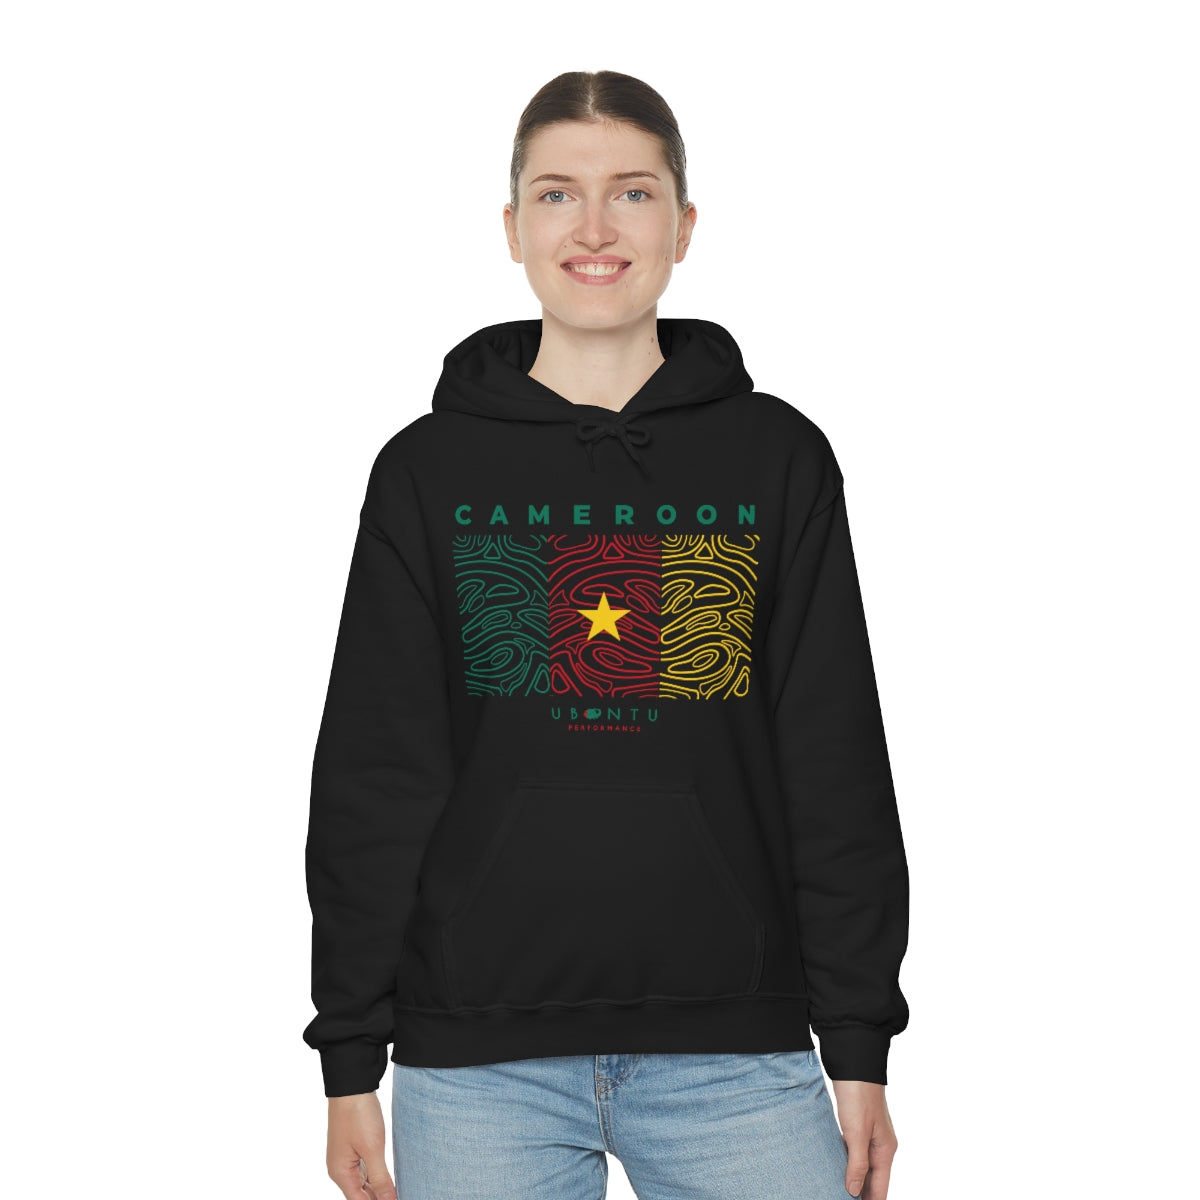 Cameroon flag colors unisex Hooded Sweatshirt soccer football fan gift hoodie